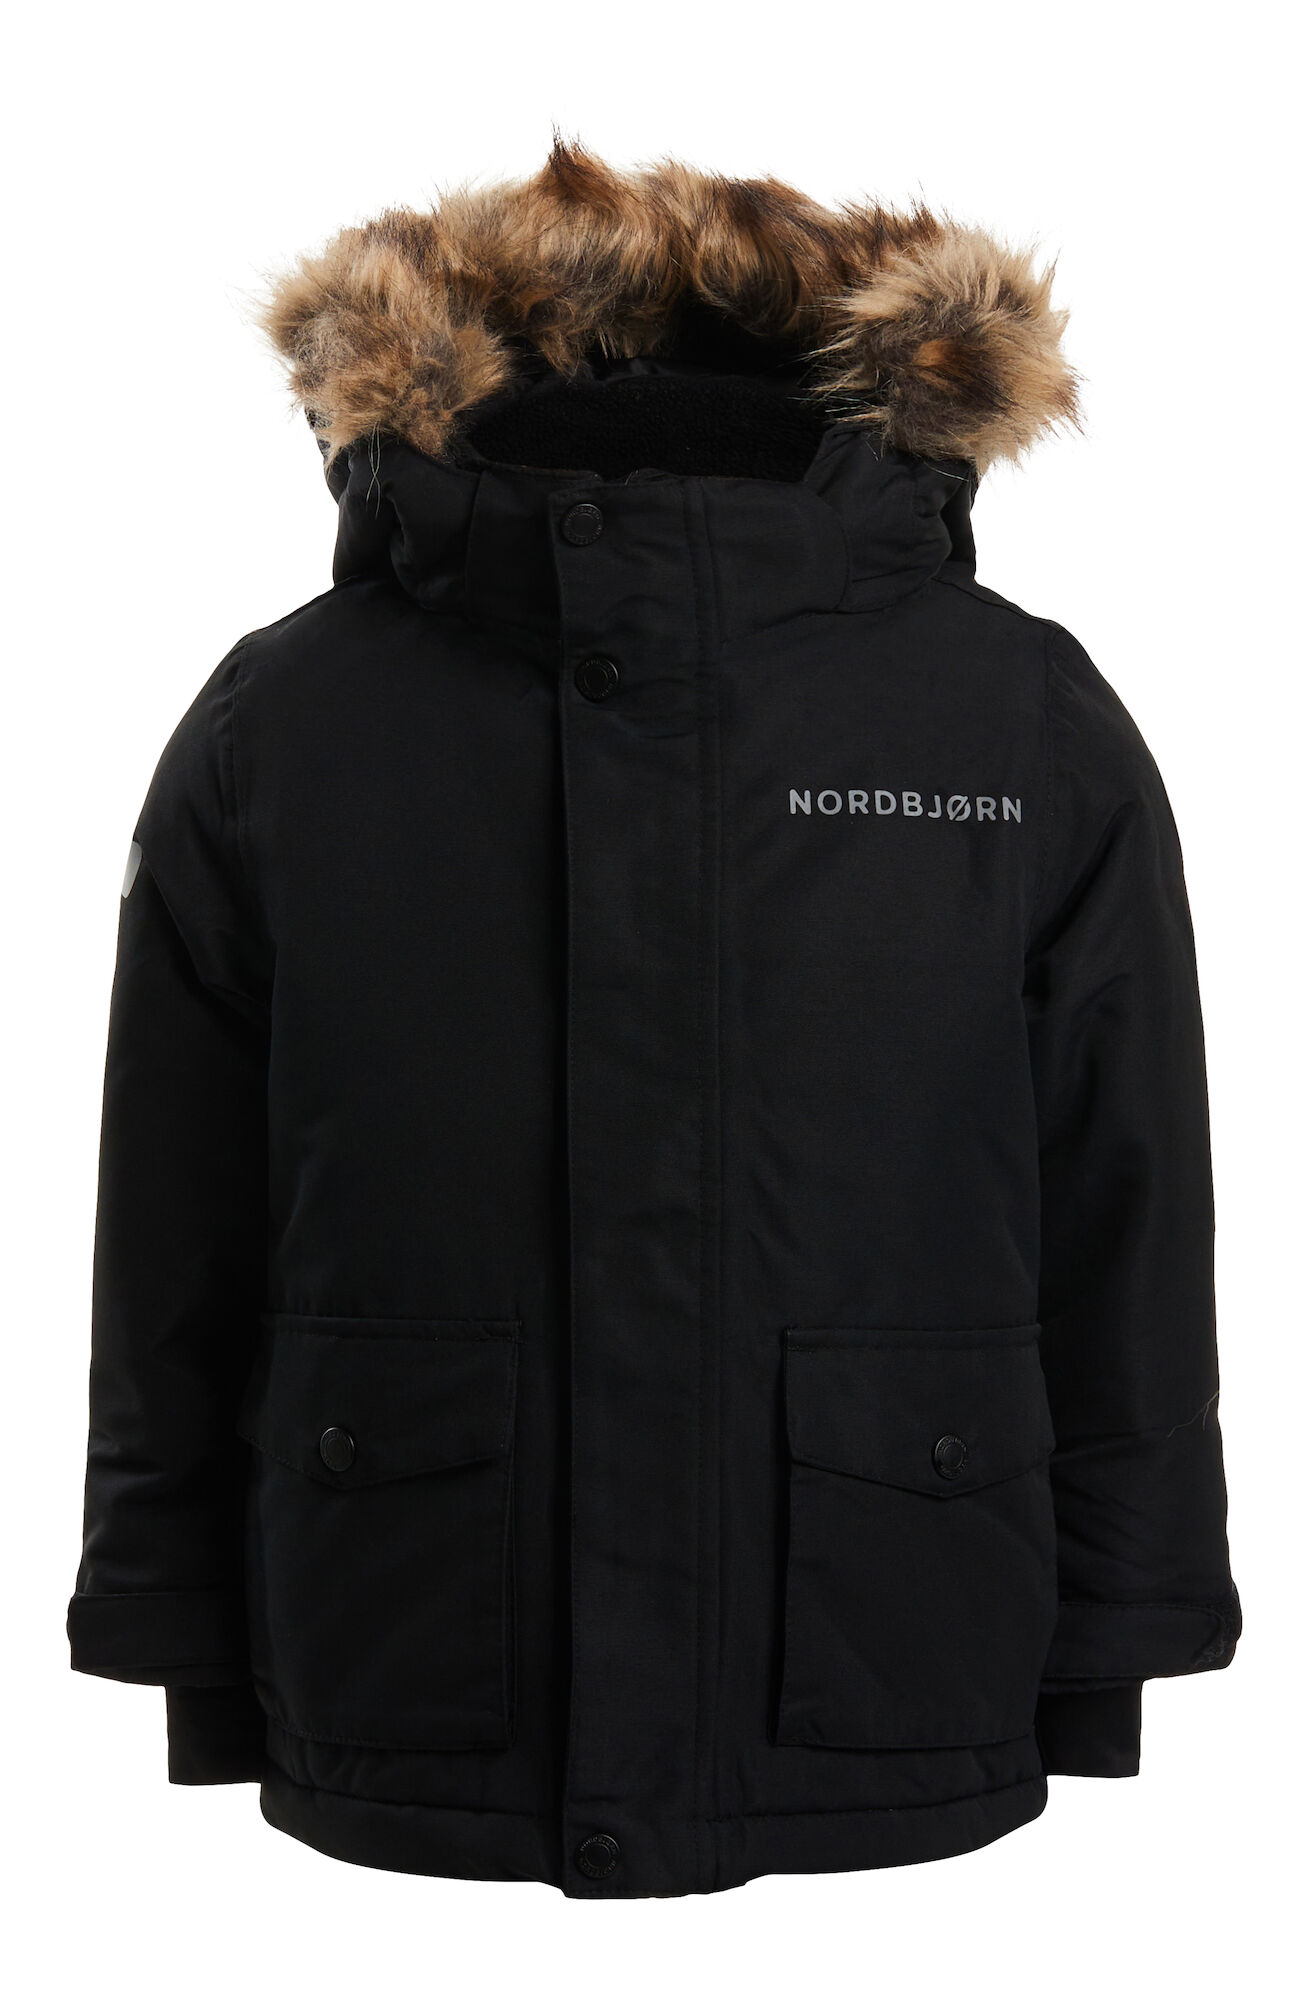 Nordbjørn Avalanche Takki, Solid Black, Koko 98